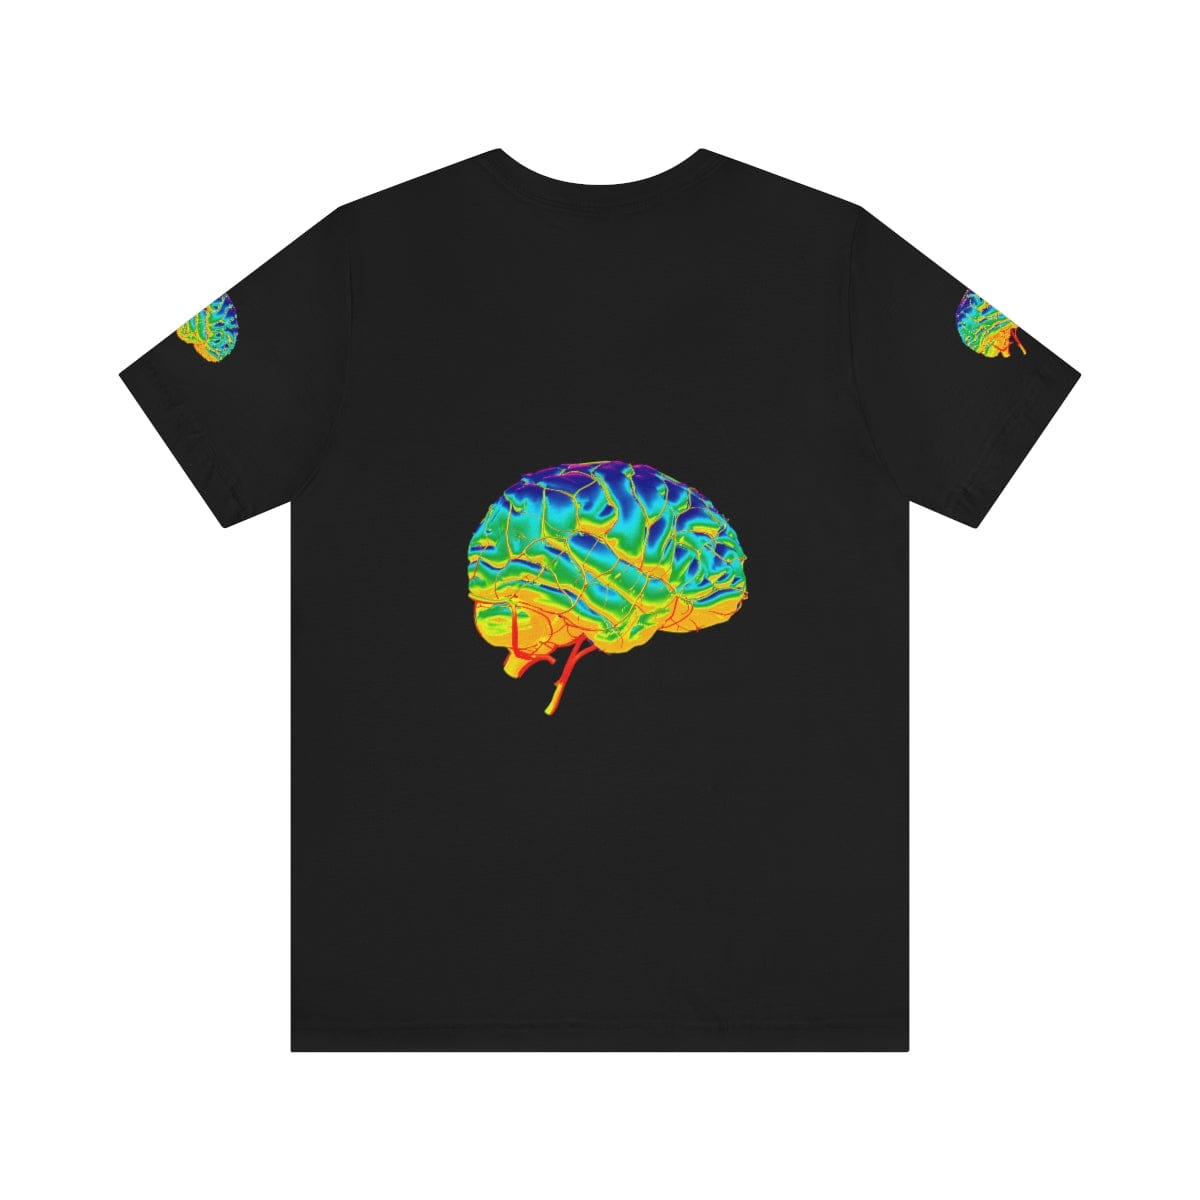 All Premium World Brain Black T-Shirt